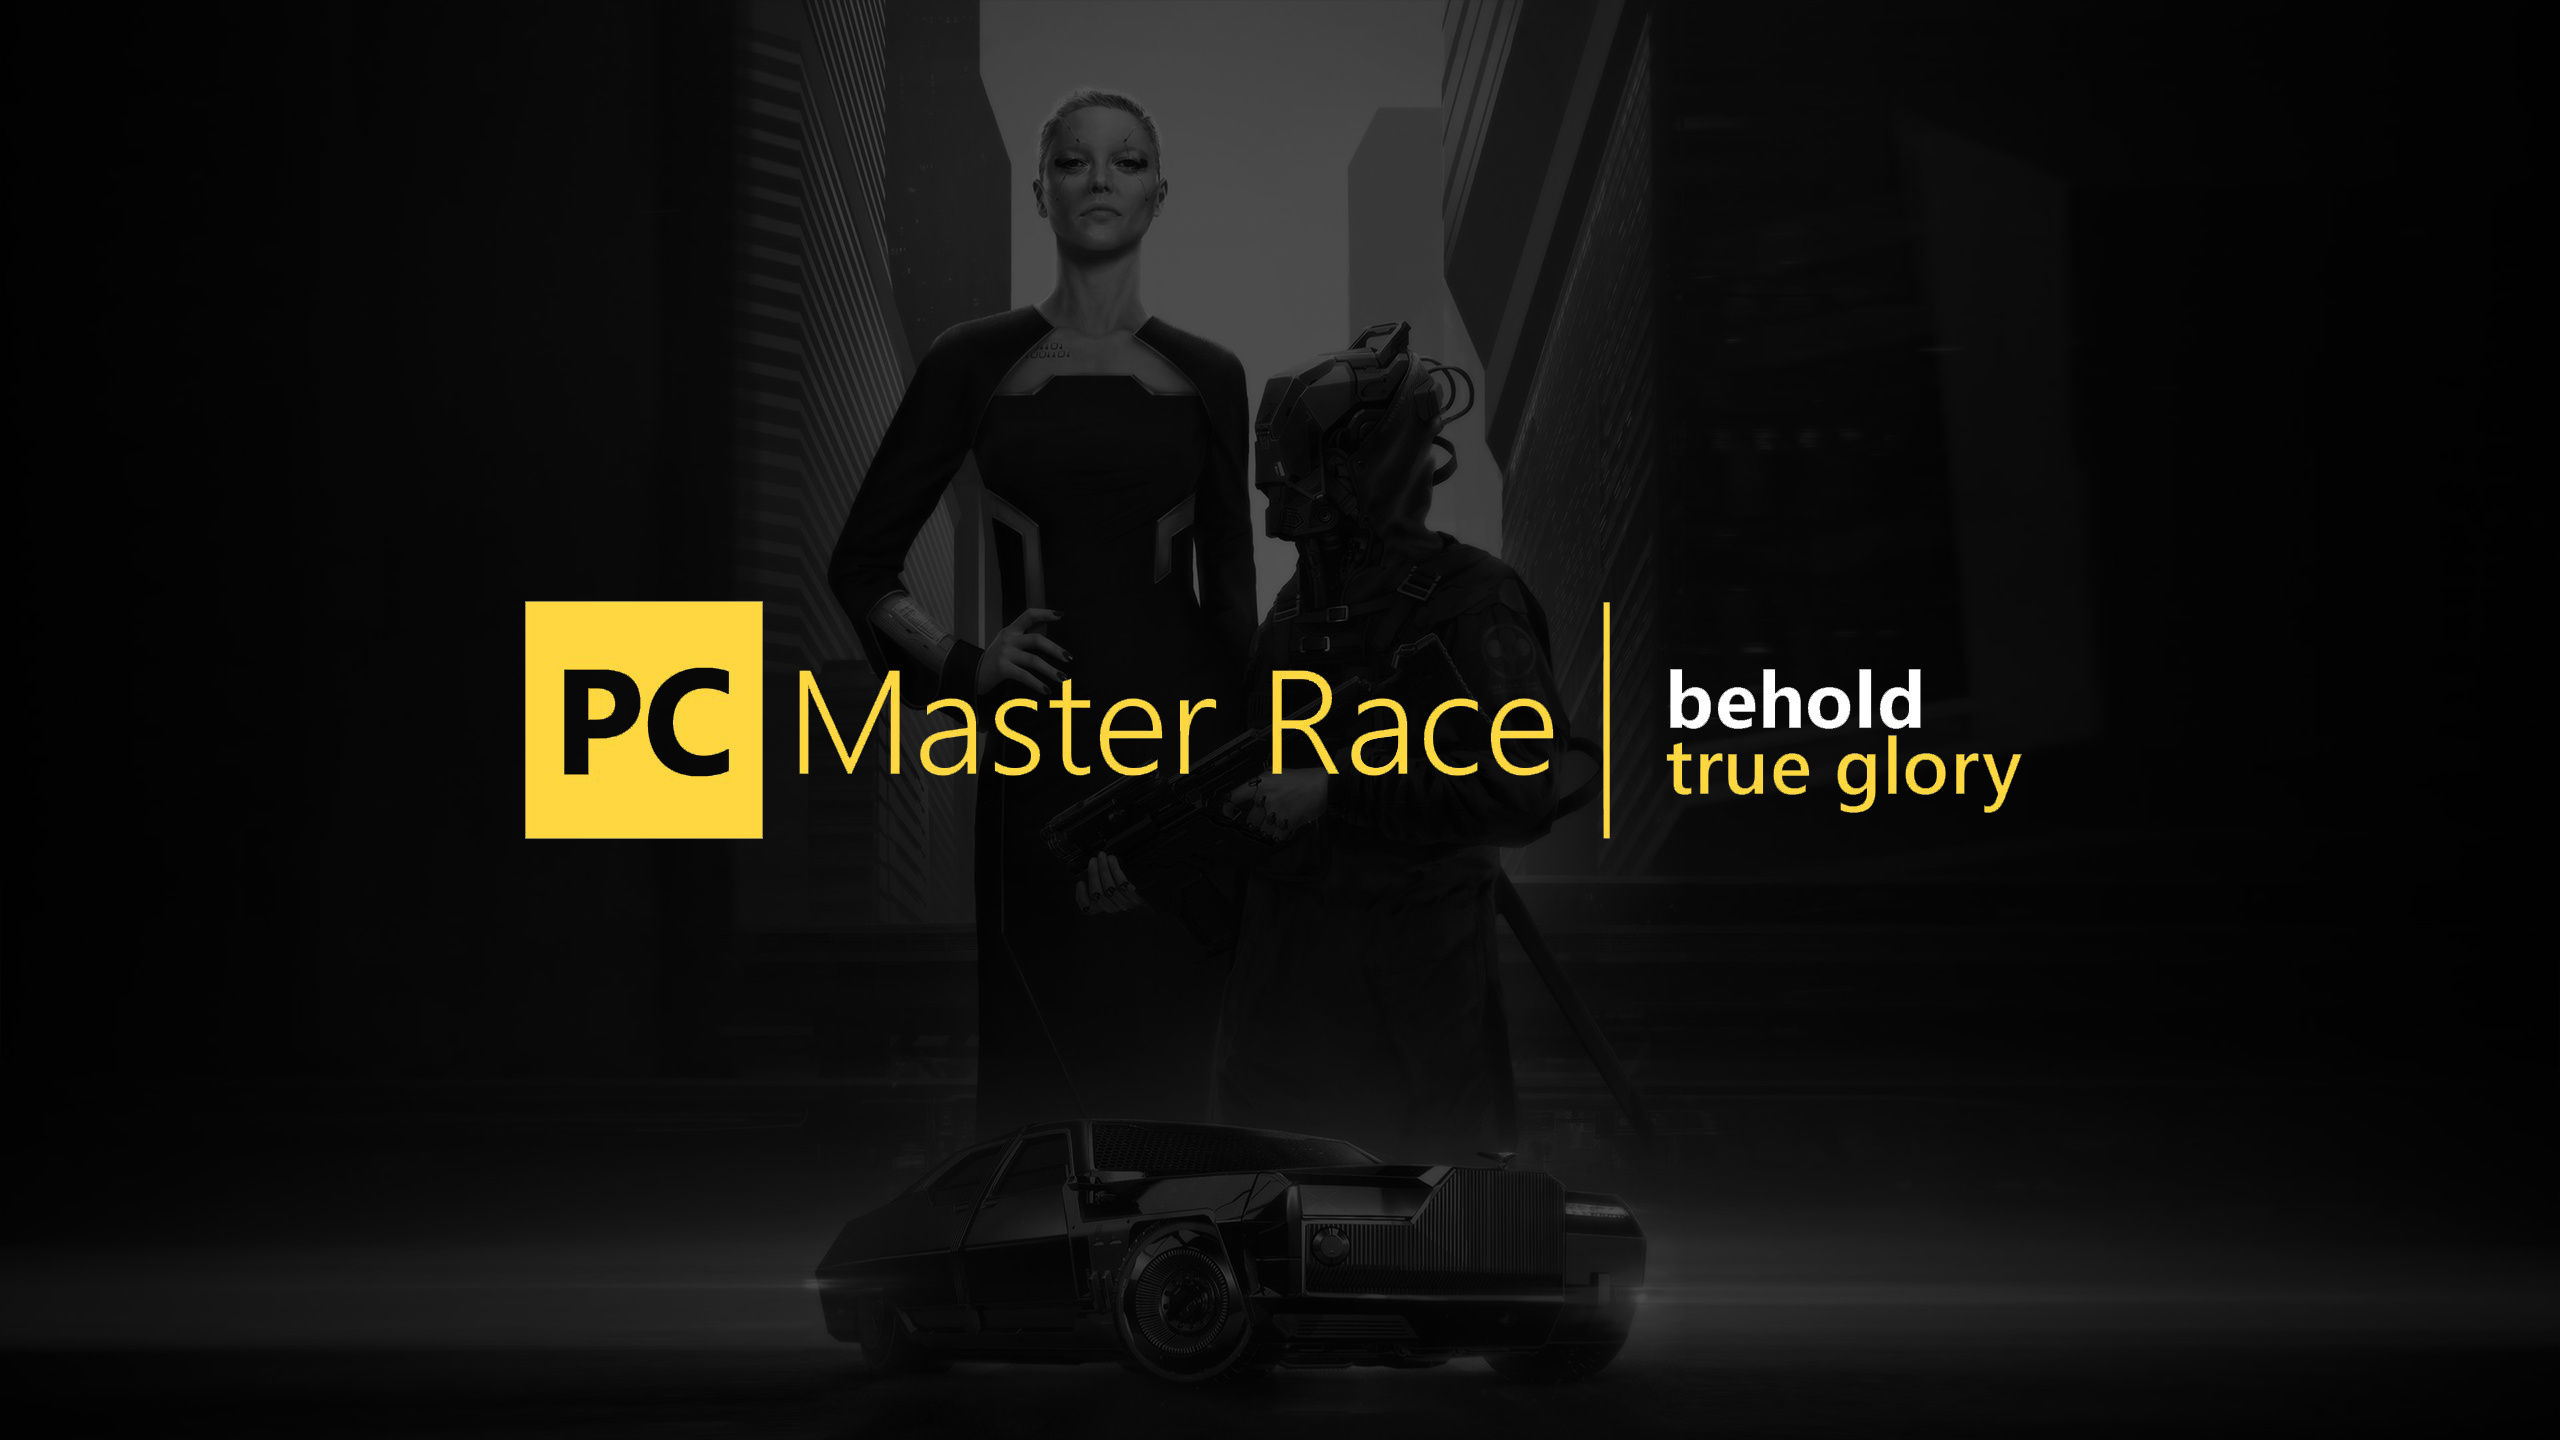 General 2560x1440 PC Master  Race PC gaming logo digital art text